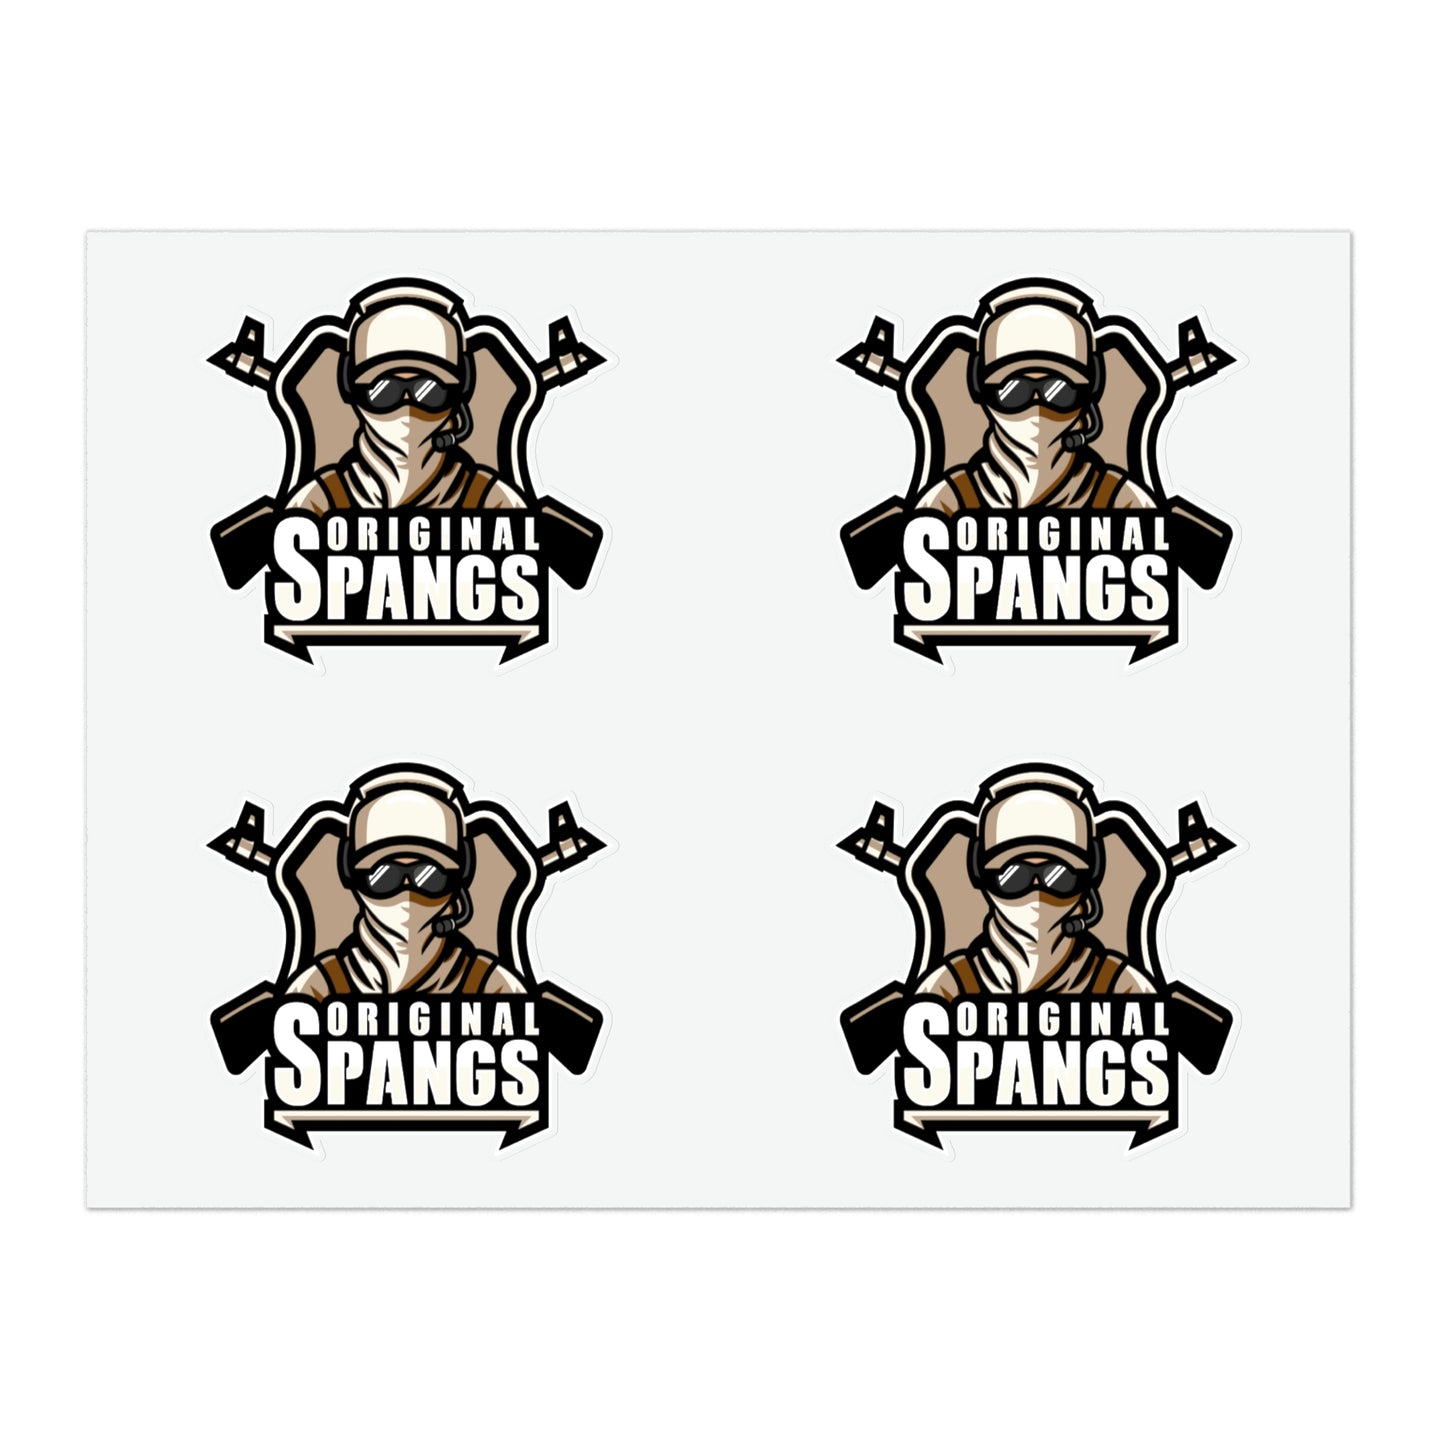 Spangs Sticker Sheets